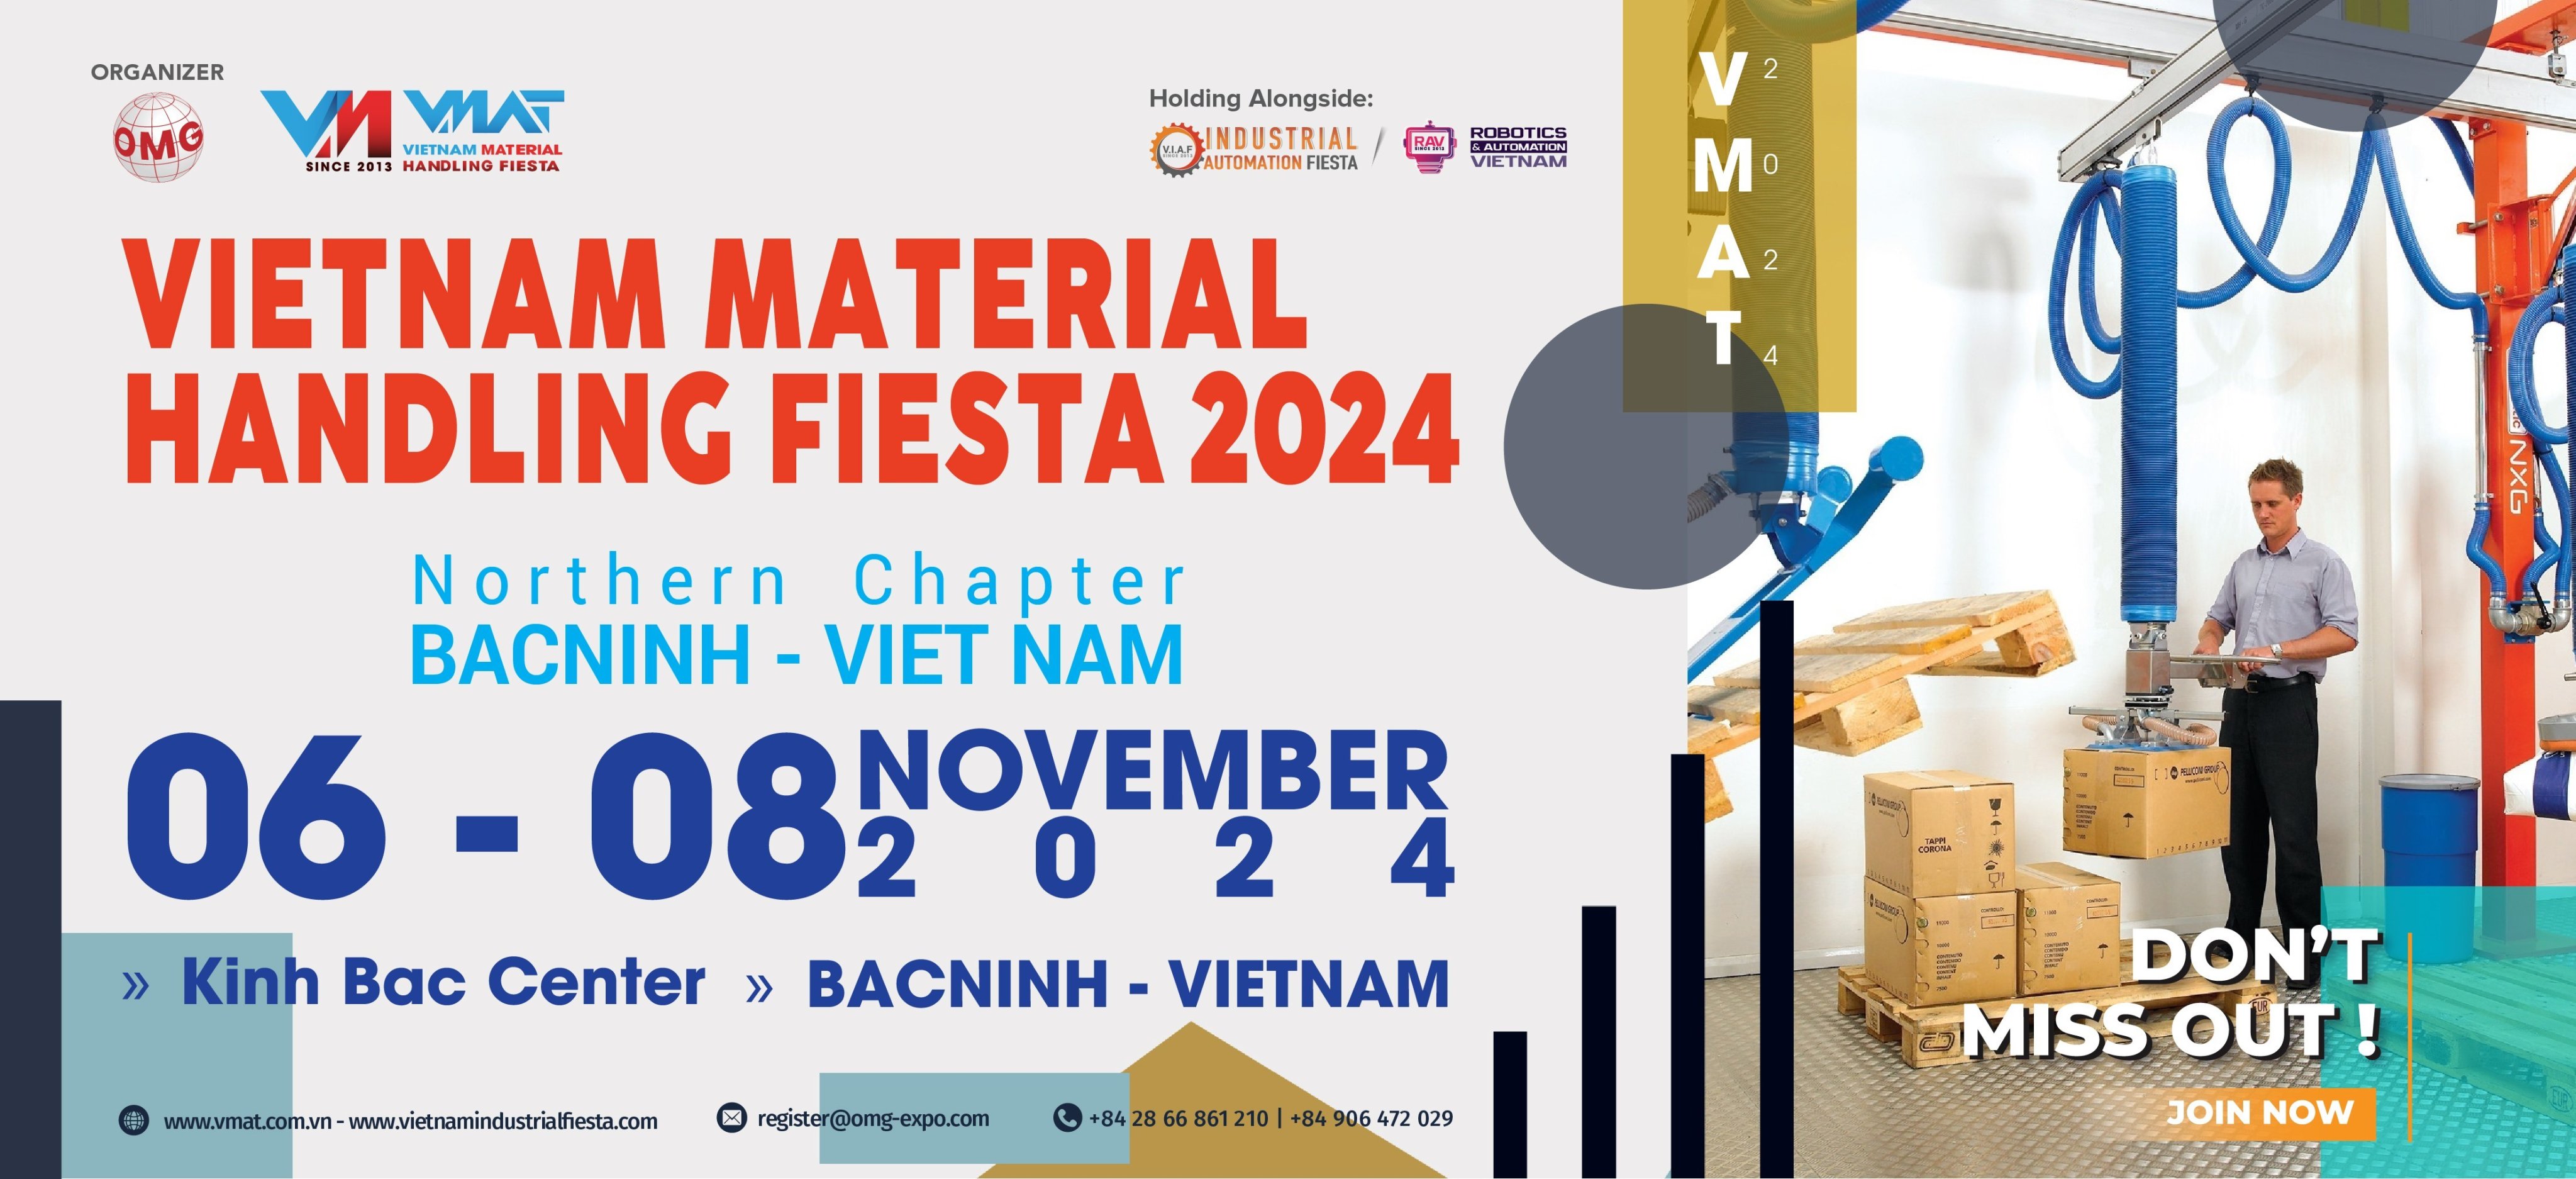 VMAT 2024 - VIETNAM MATERIAL HANDLING FIESTA 